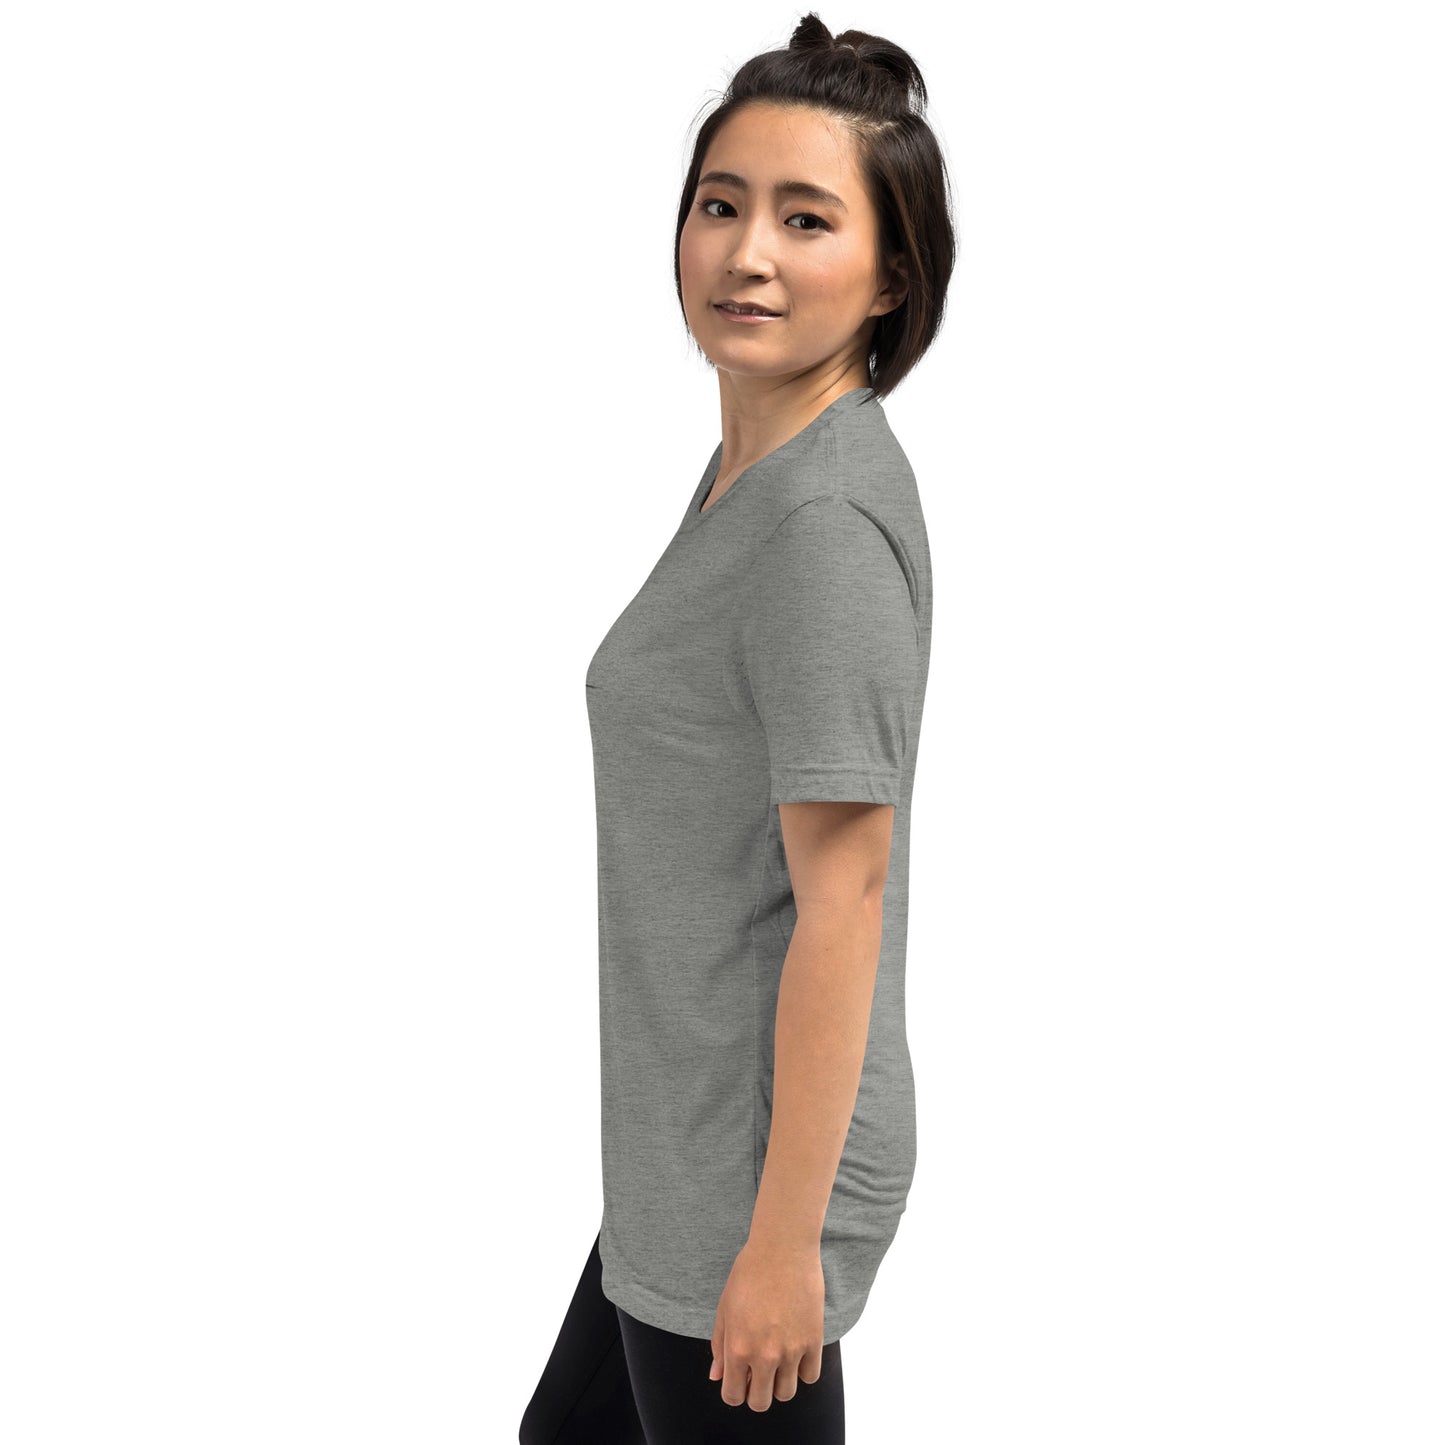 Jackalope Short Sleeve T-shirt